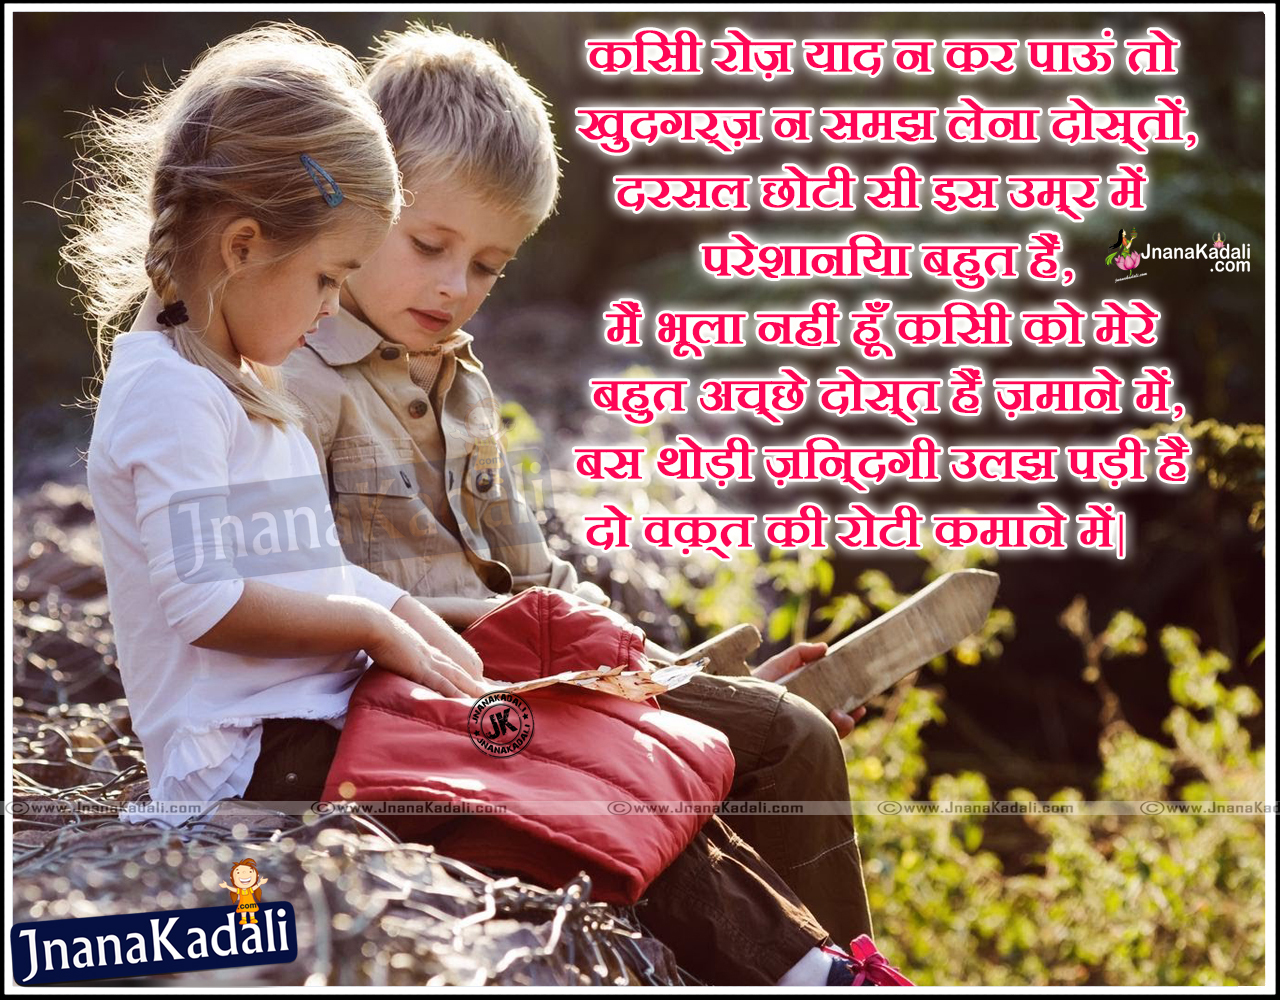 Excellent Hindi Friendship or Dosti Shayari Images | JNANA KADALI.COM |Telugu Quotes|English ...